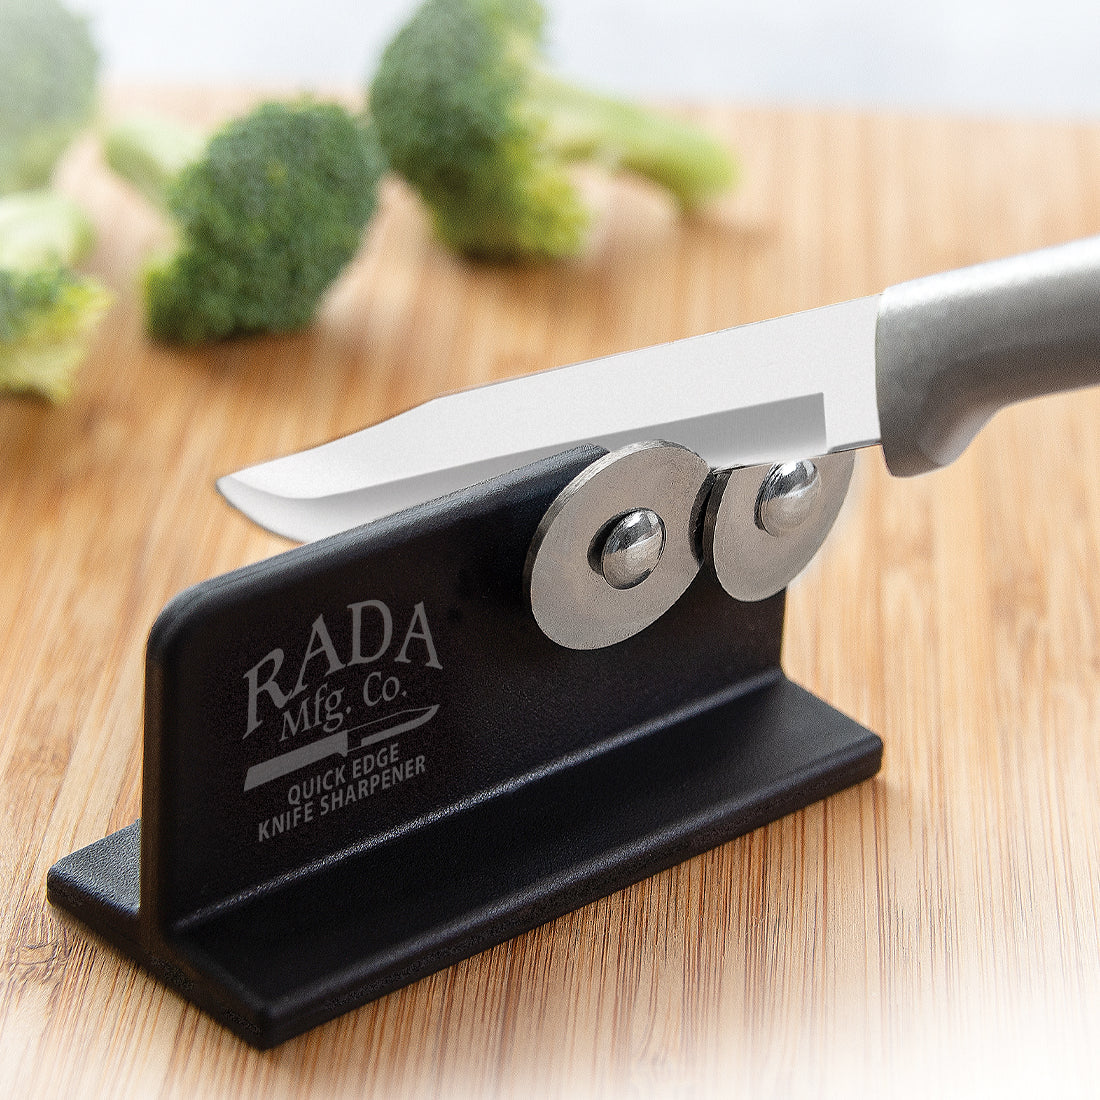 RADA Cutlery - Quick Edge Knife Sharpener R119